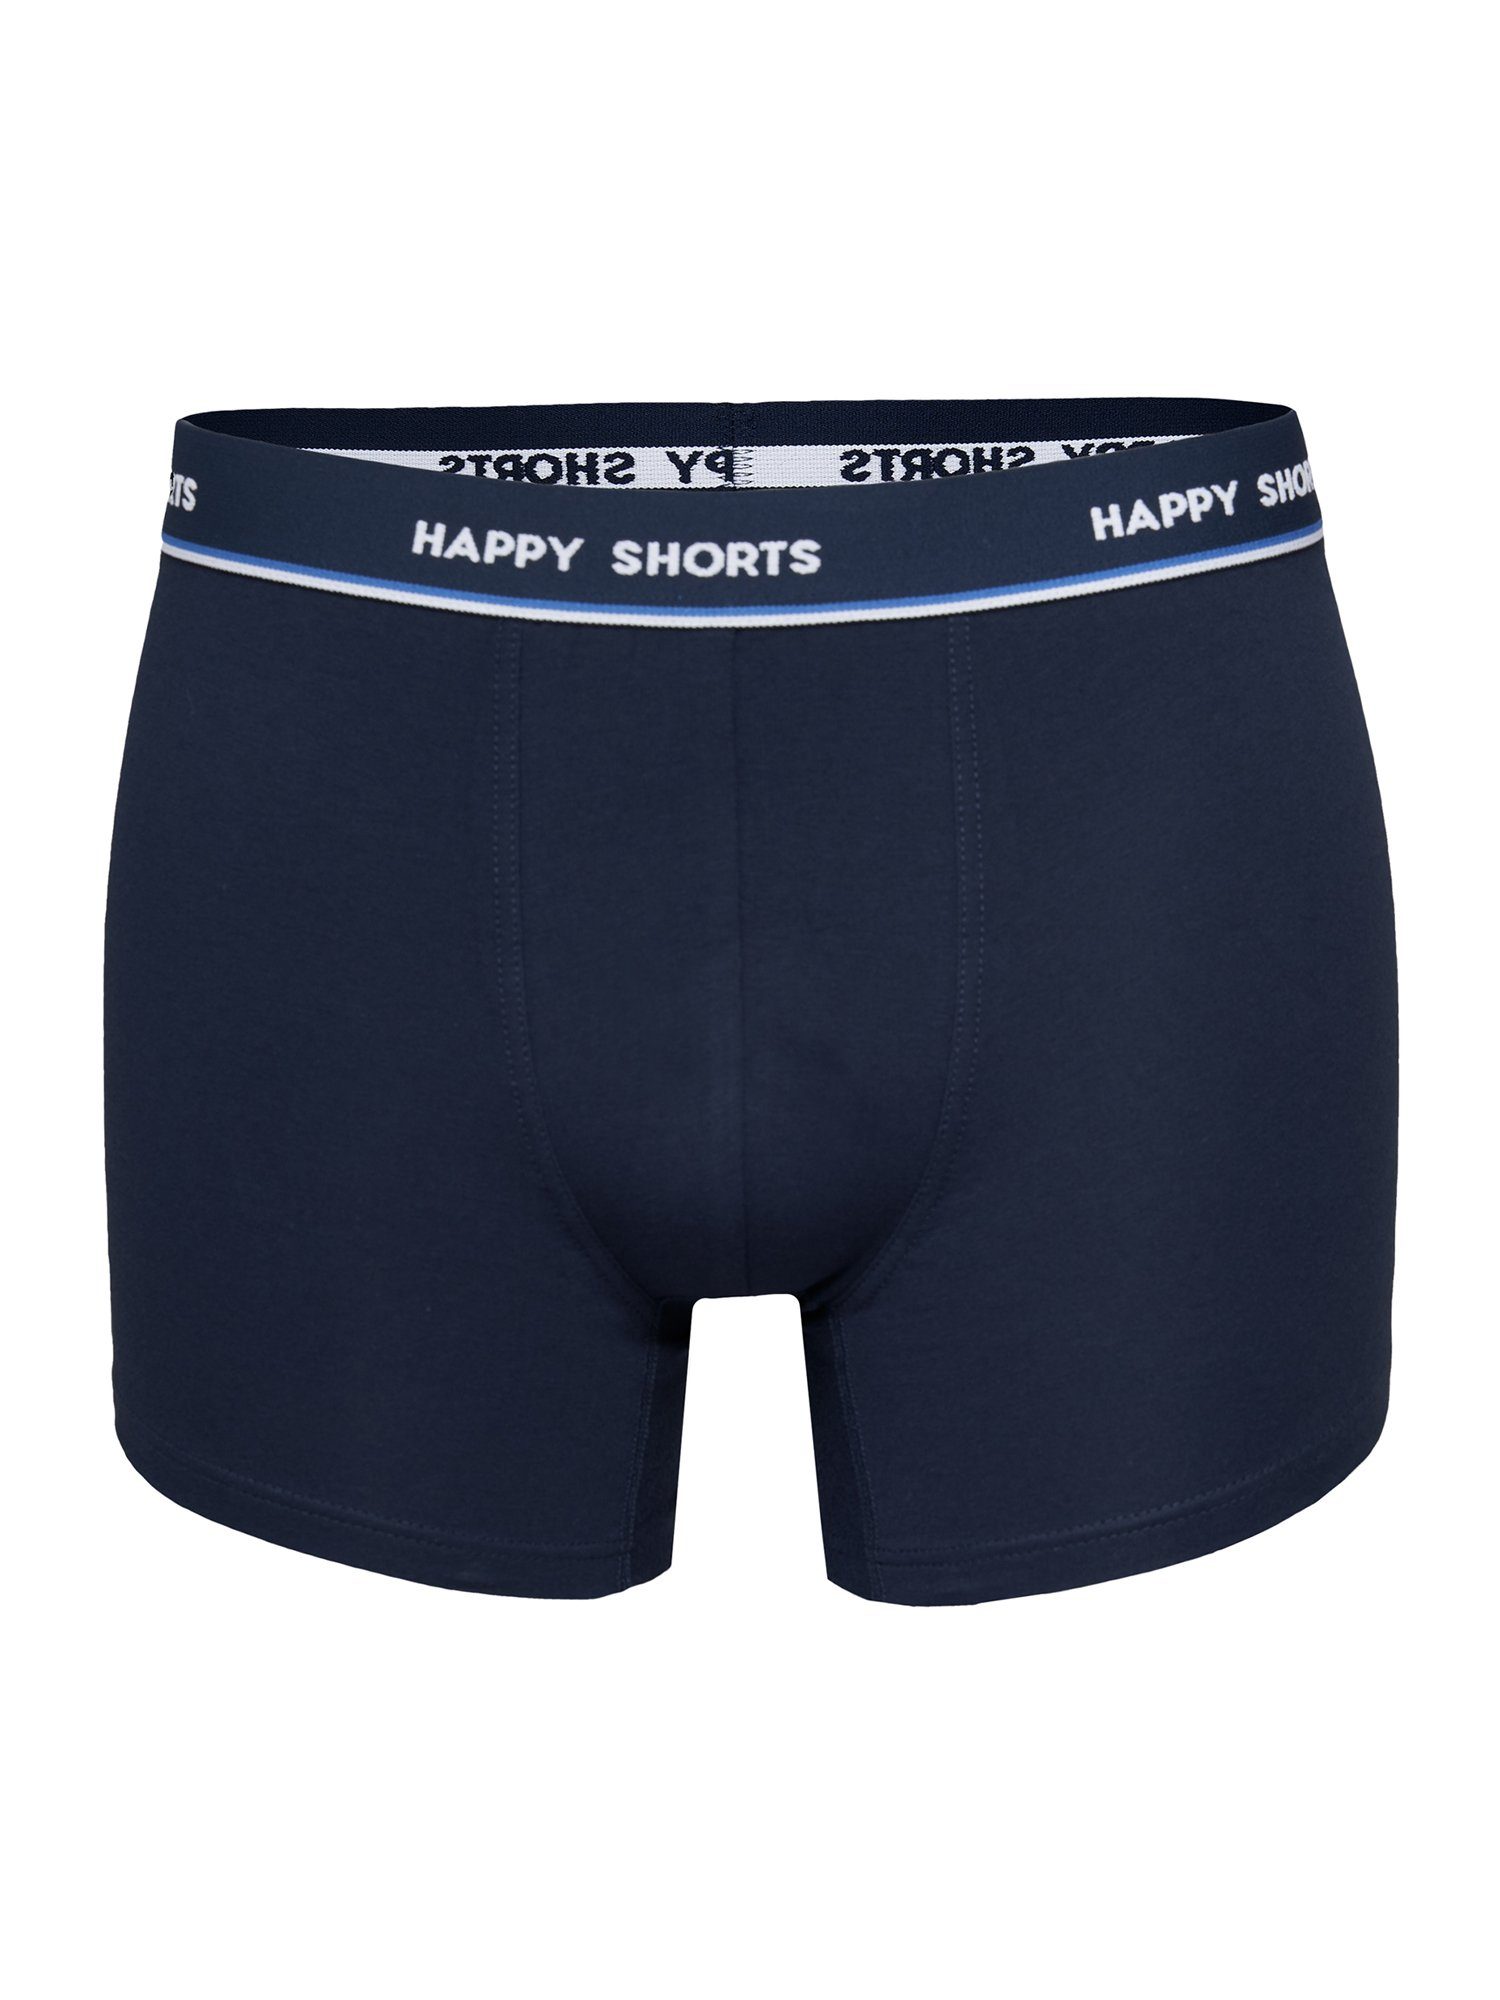 Tropical Pants SHORTS (2-St) Retro HAPPY Solids